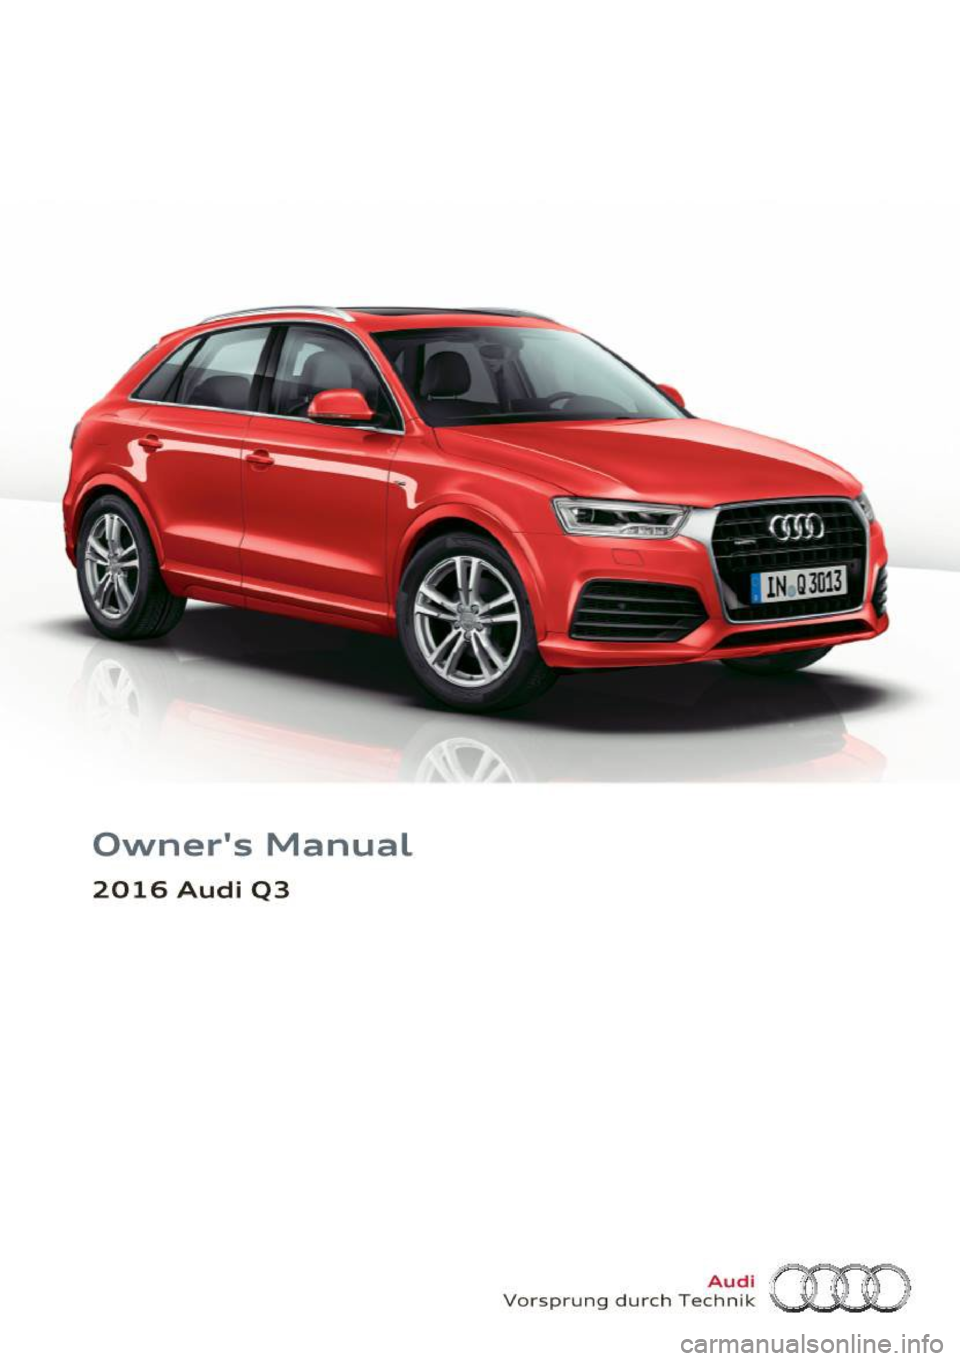 AUDI Q3 2016  Owners Manual owners tv1anual 
2016 Audi Q3  